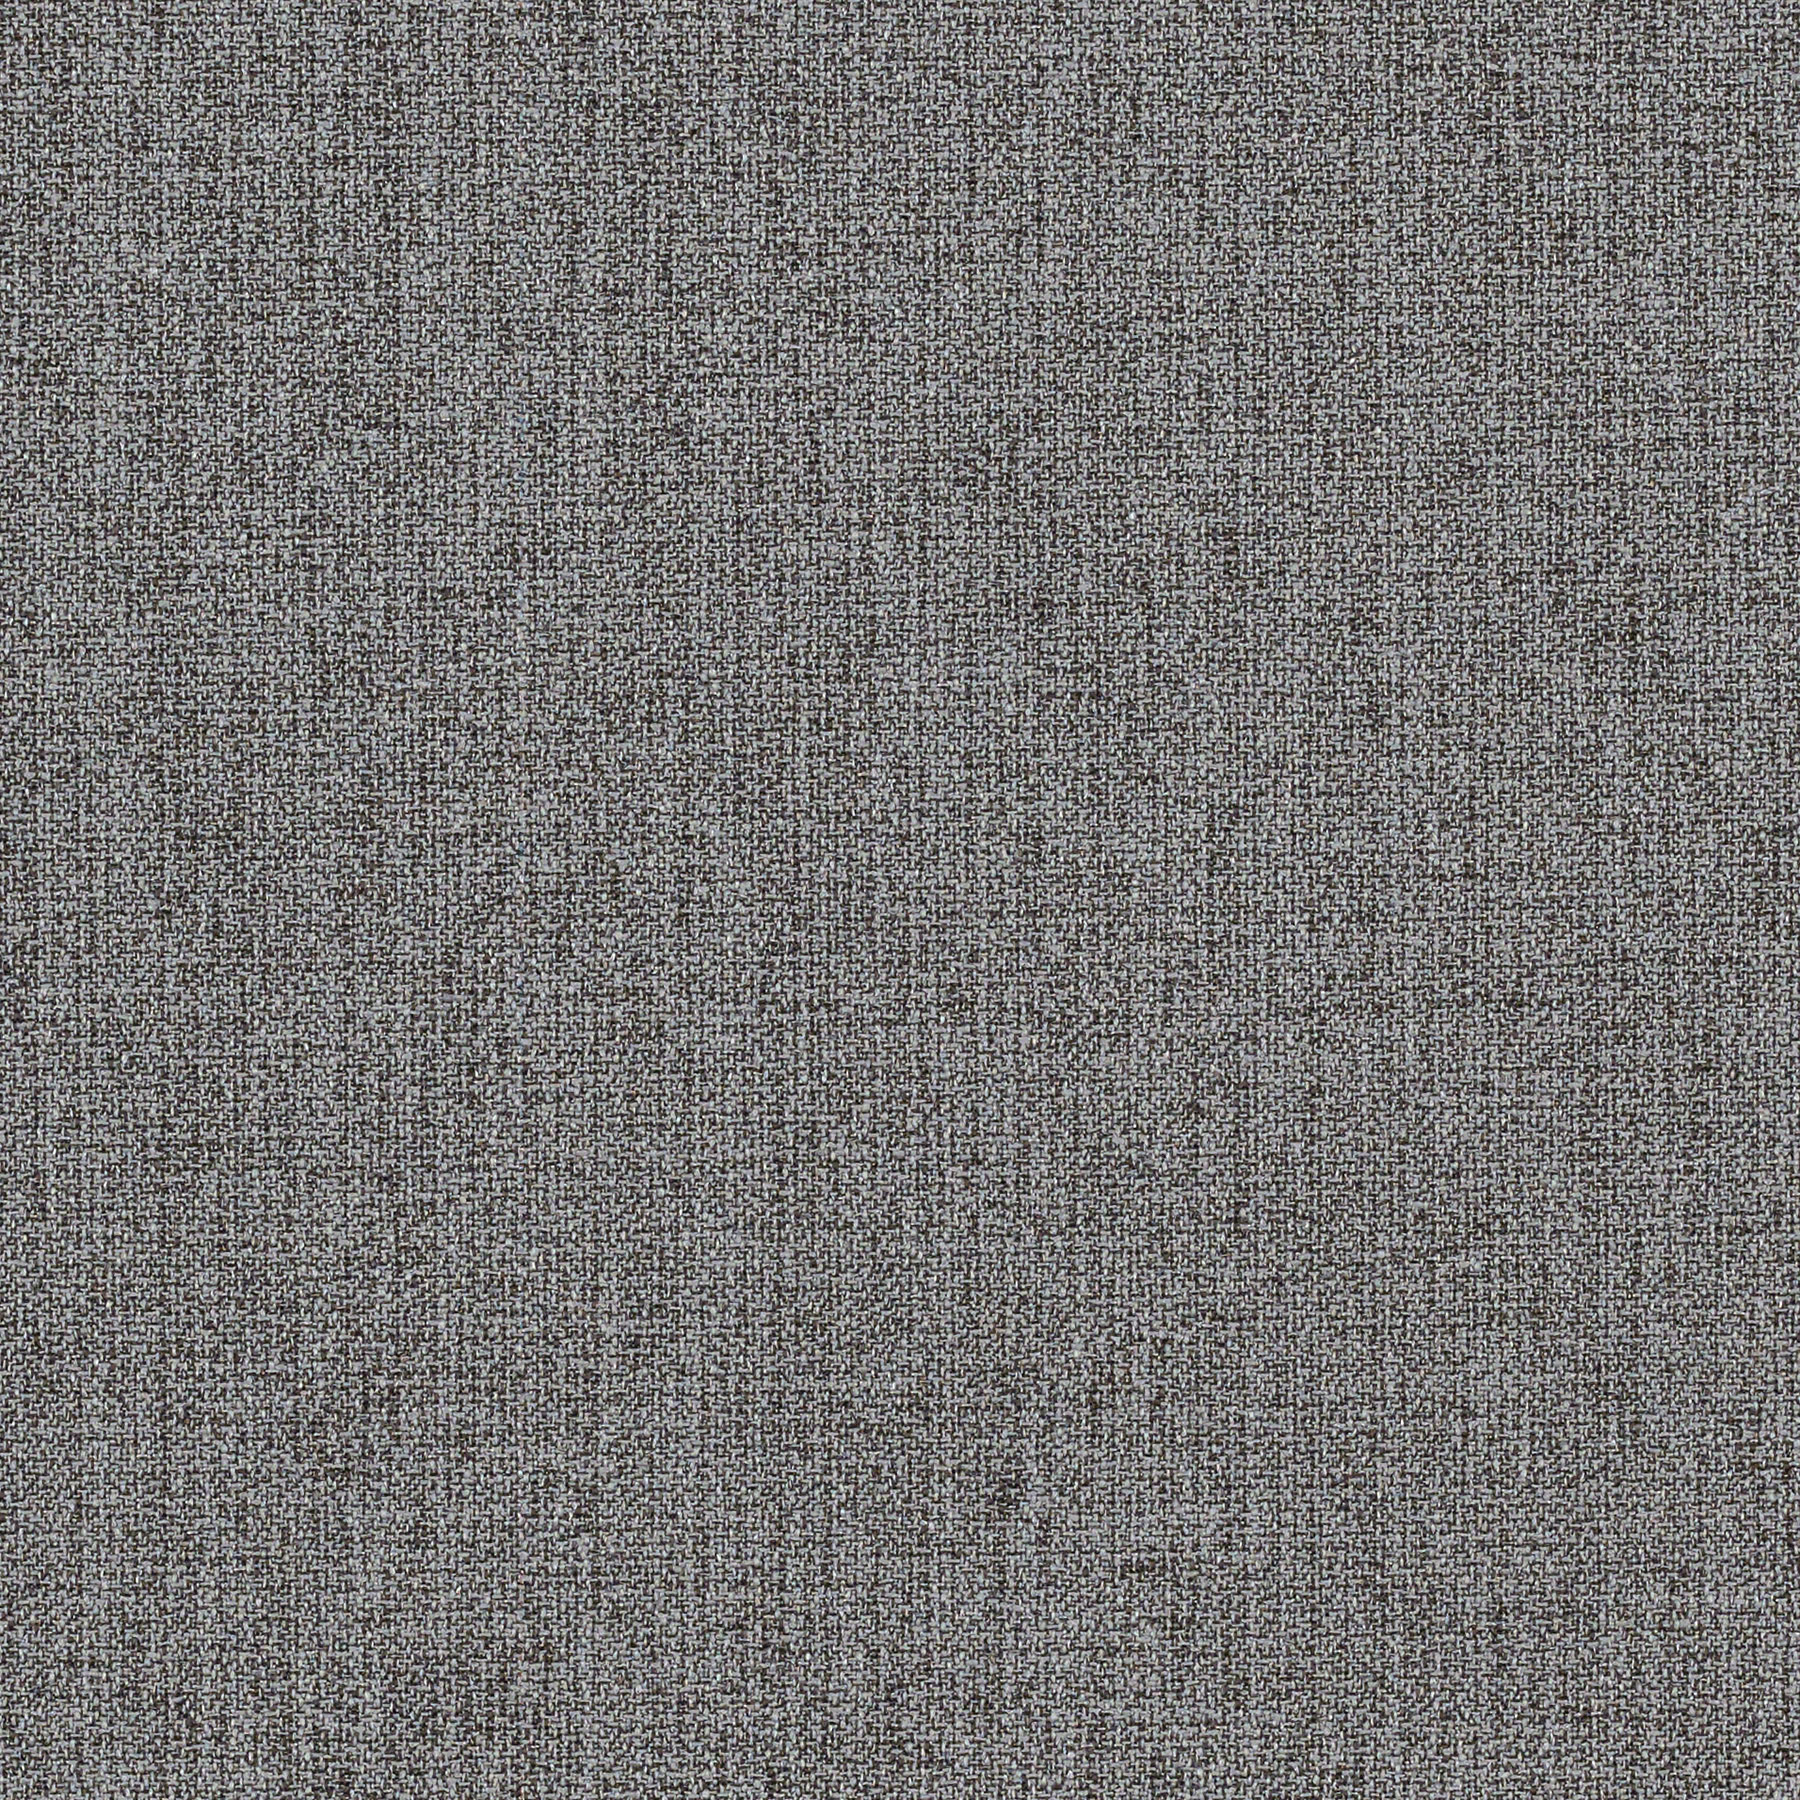 Graphite Gray Plain Woven Upholstery Fabric